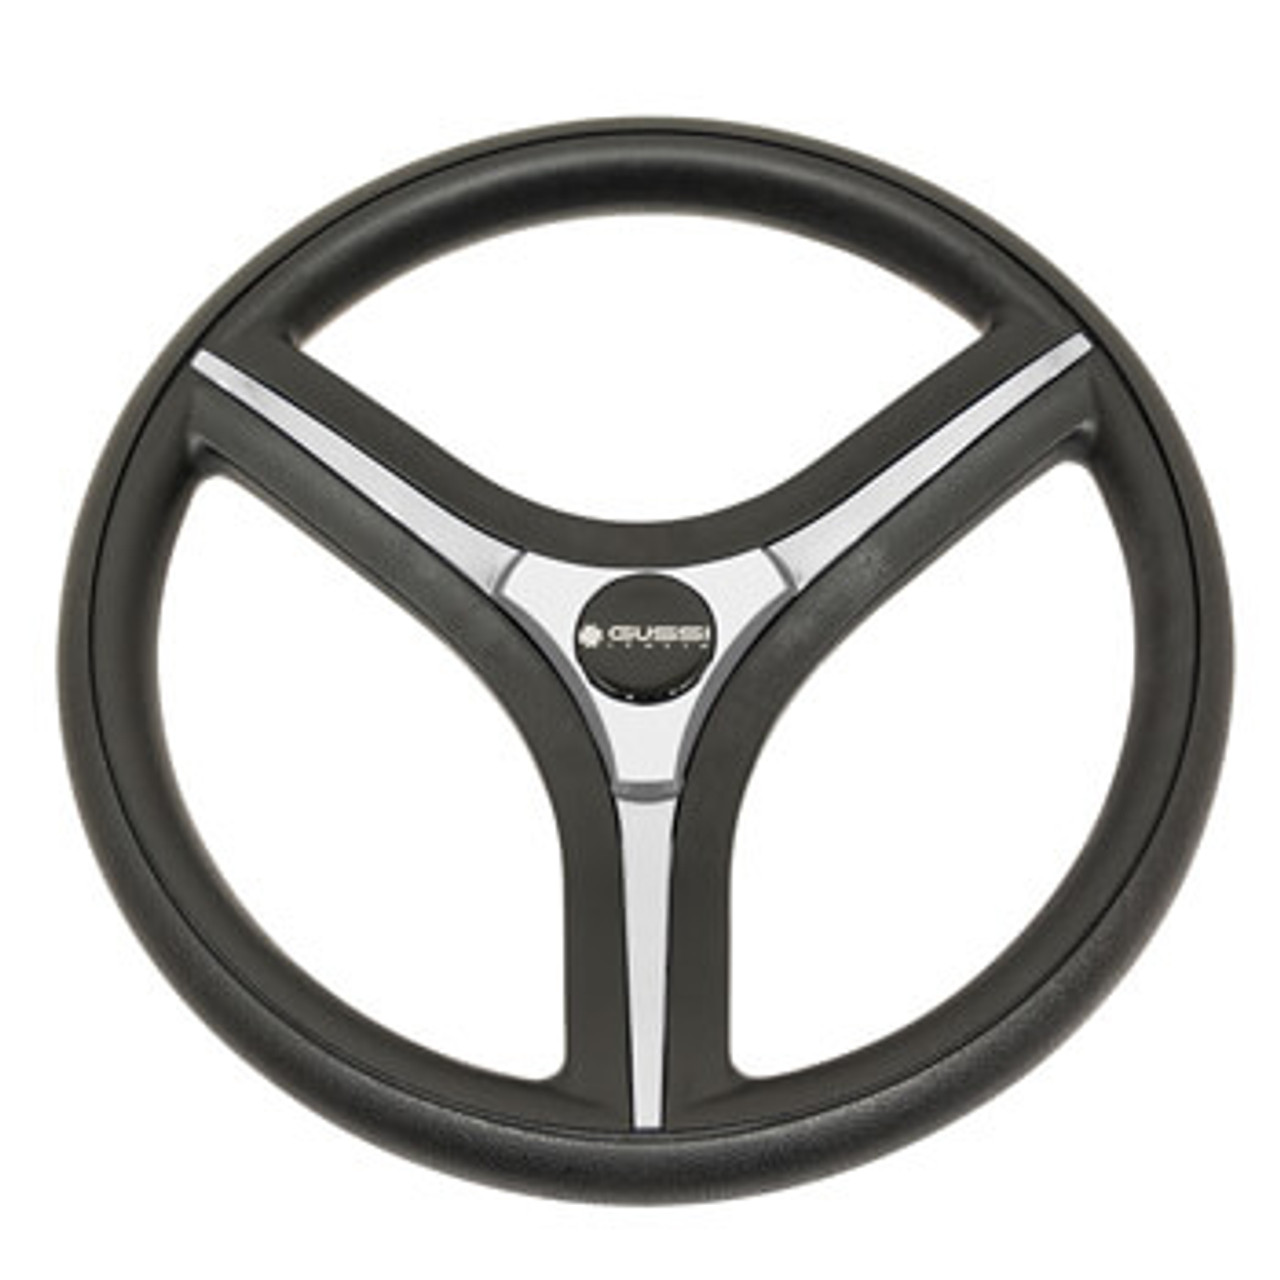 Gussi Italia Brenta Black/Silver Steering Wheel for Yamaha G16-Drive2 Golf Cart, 06-141